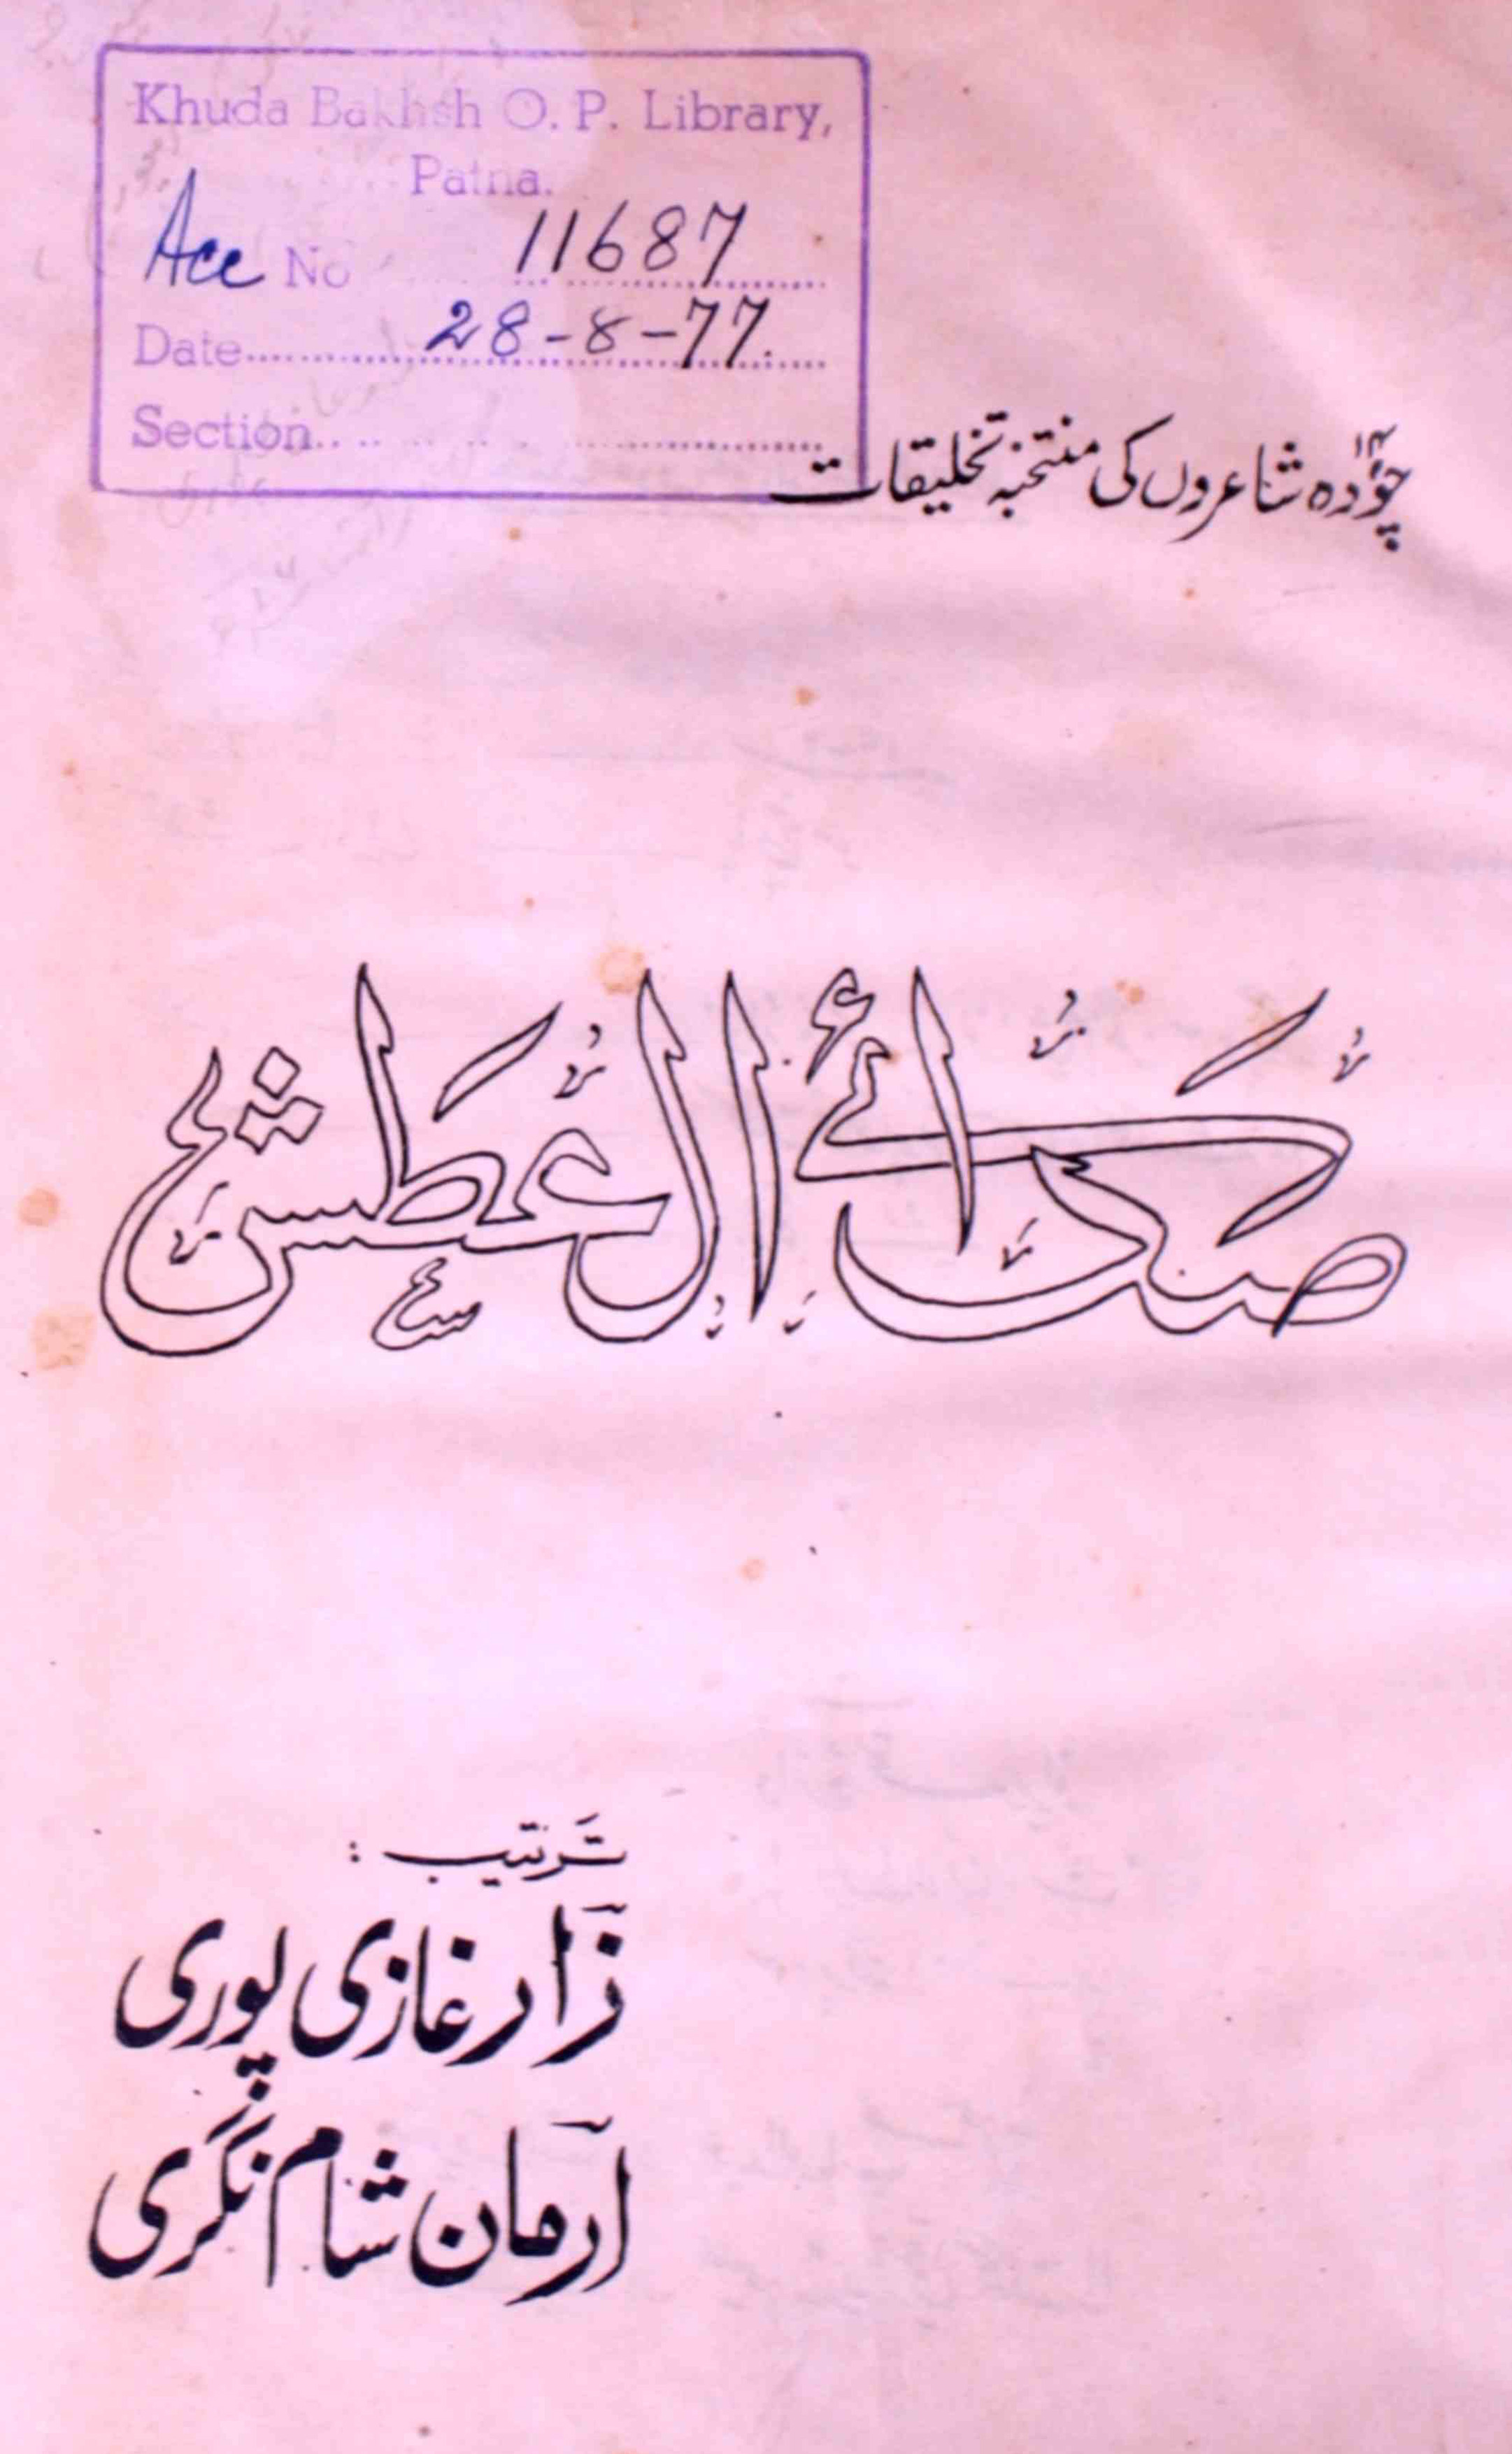 Sada-e-Al-Atsh